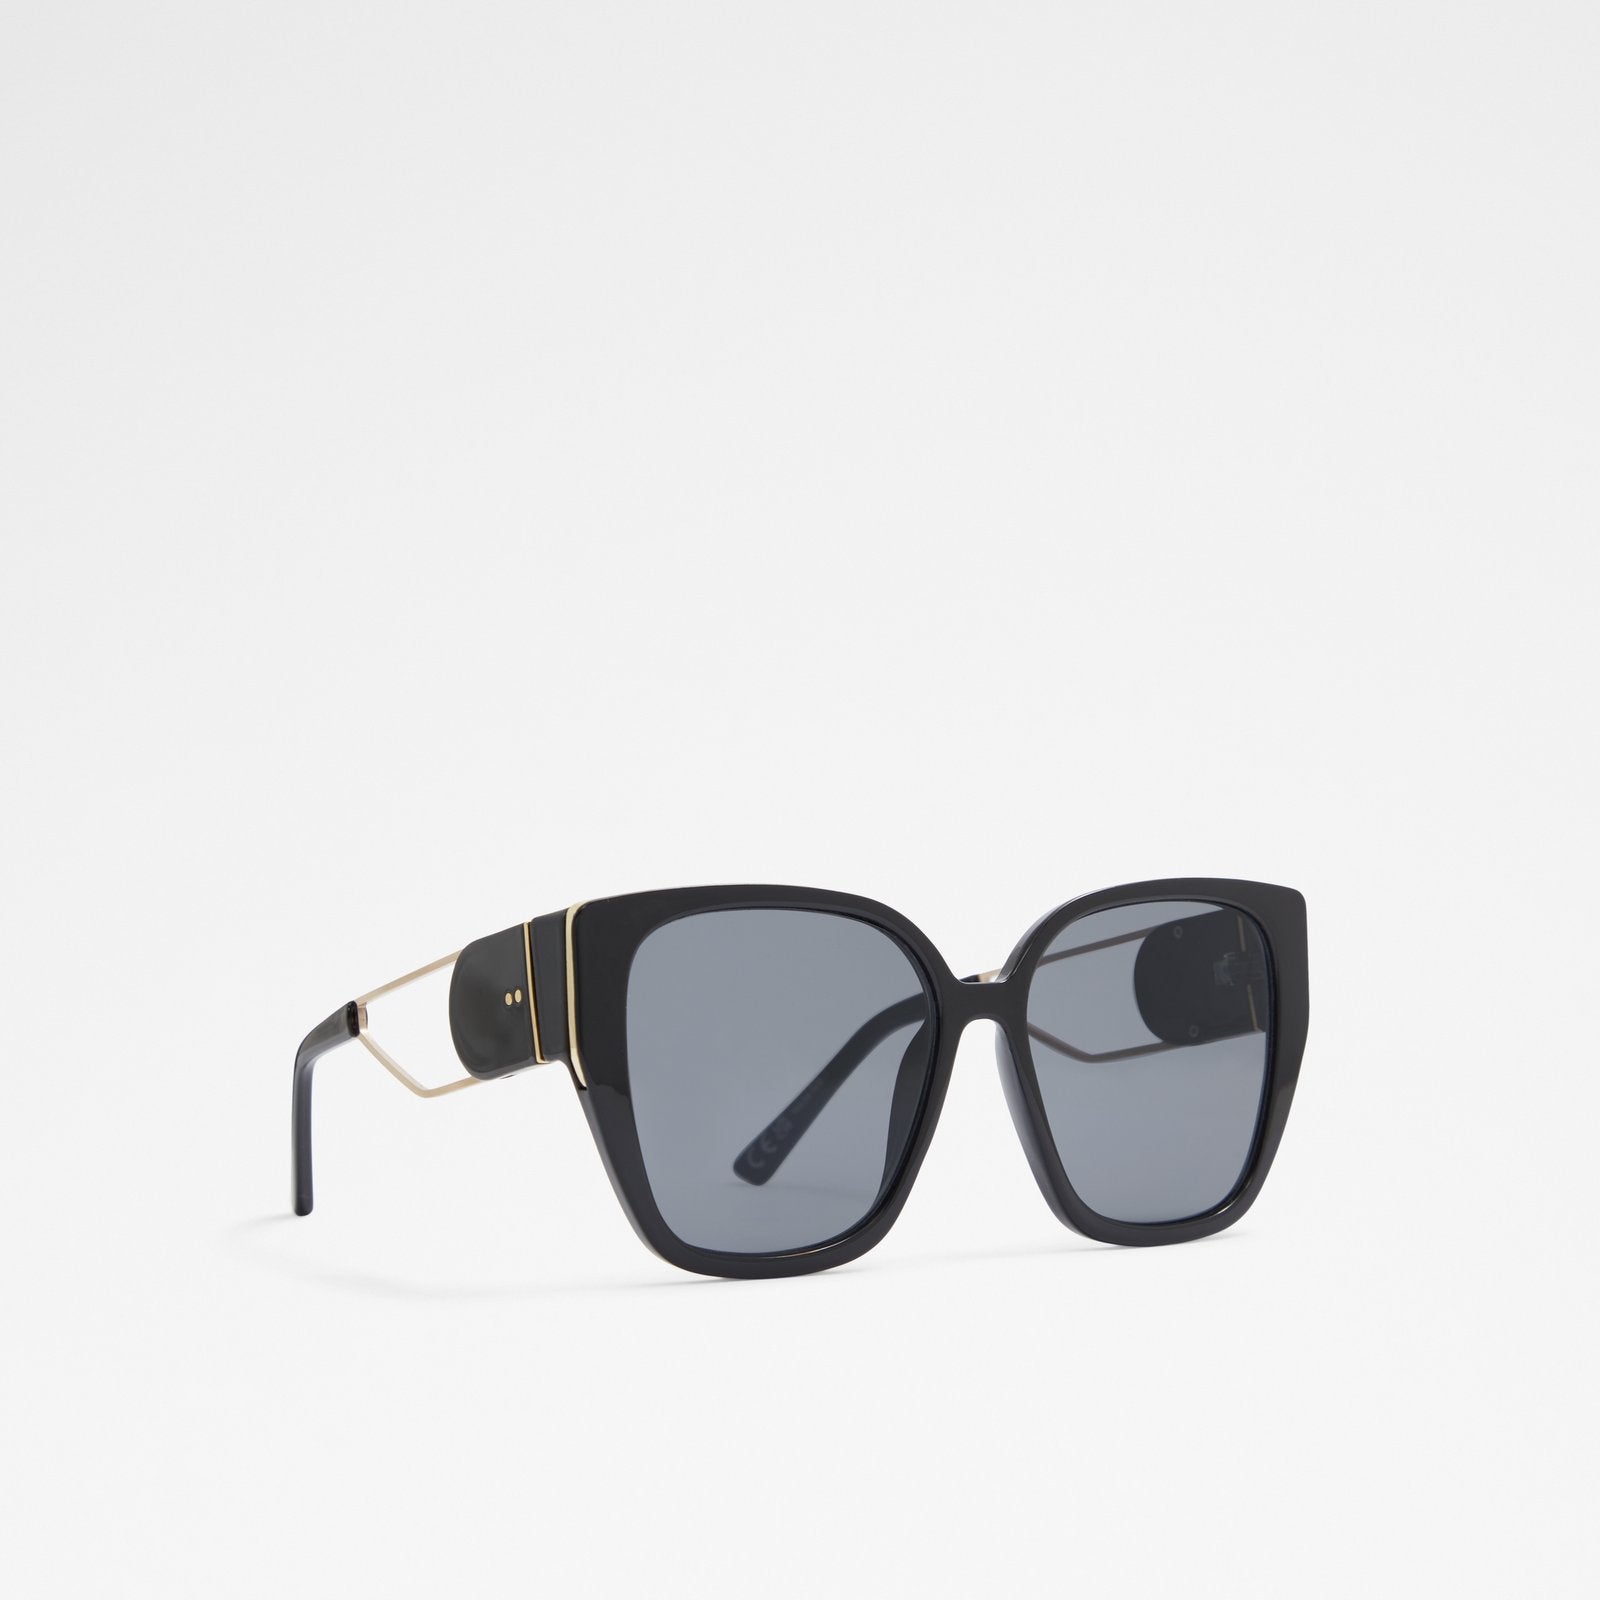 Devobanna  / Sunglasses